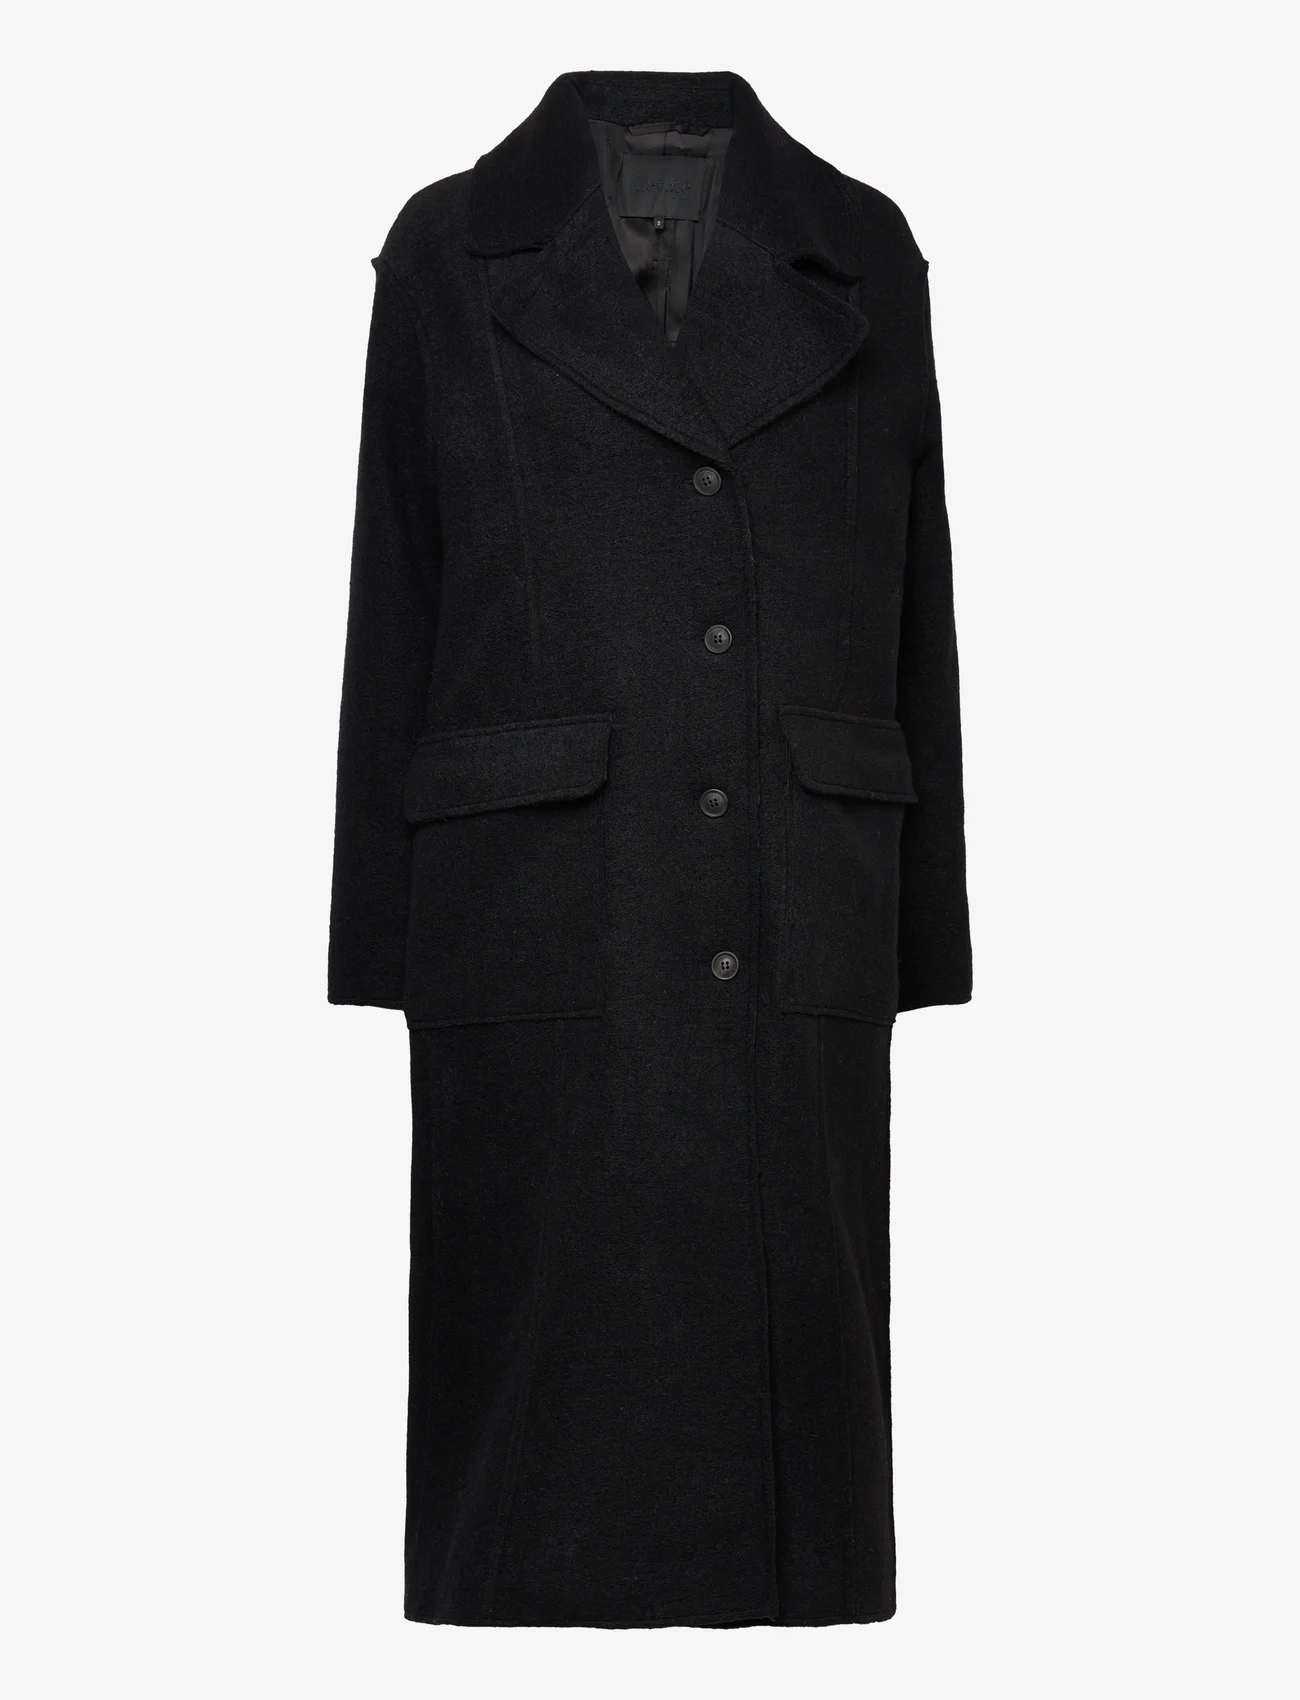 Levete Room - LR-DONNA - winter coats - l999 - black - 0